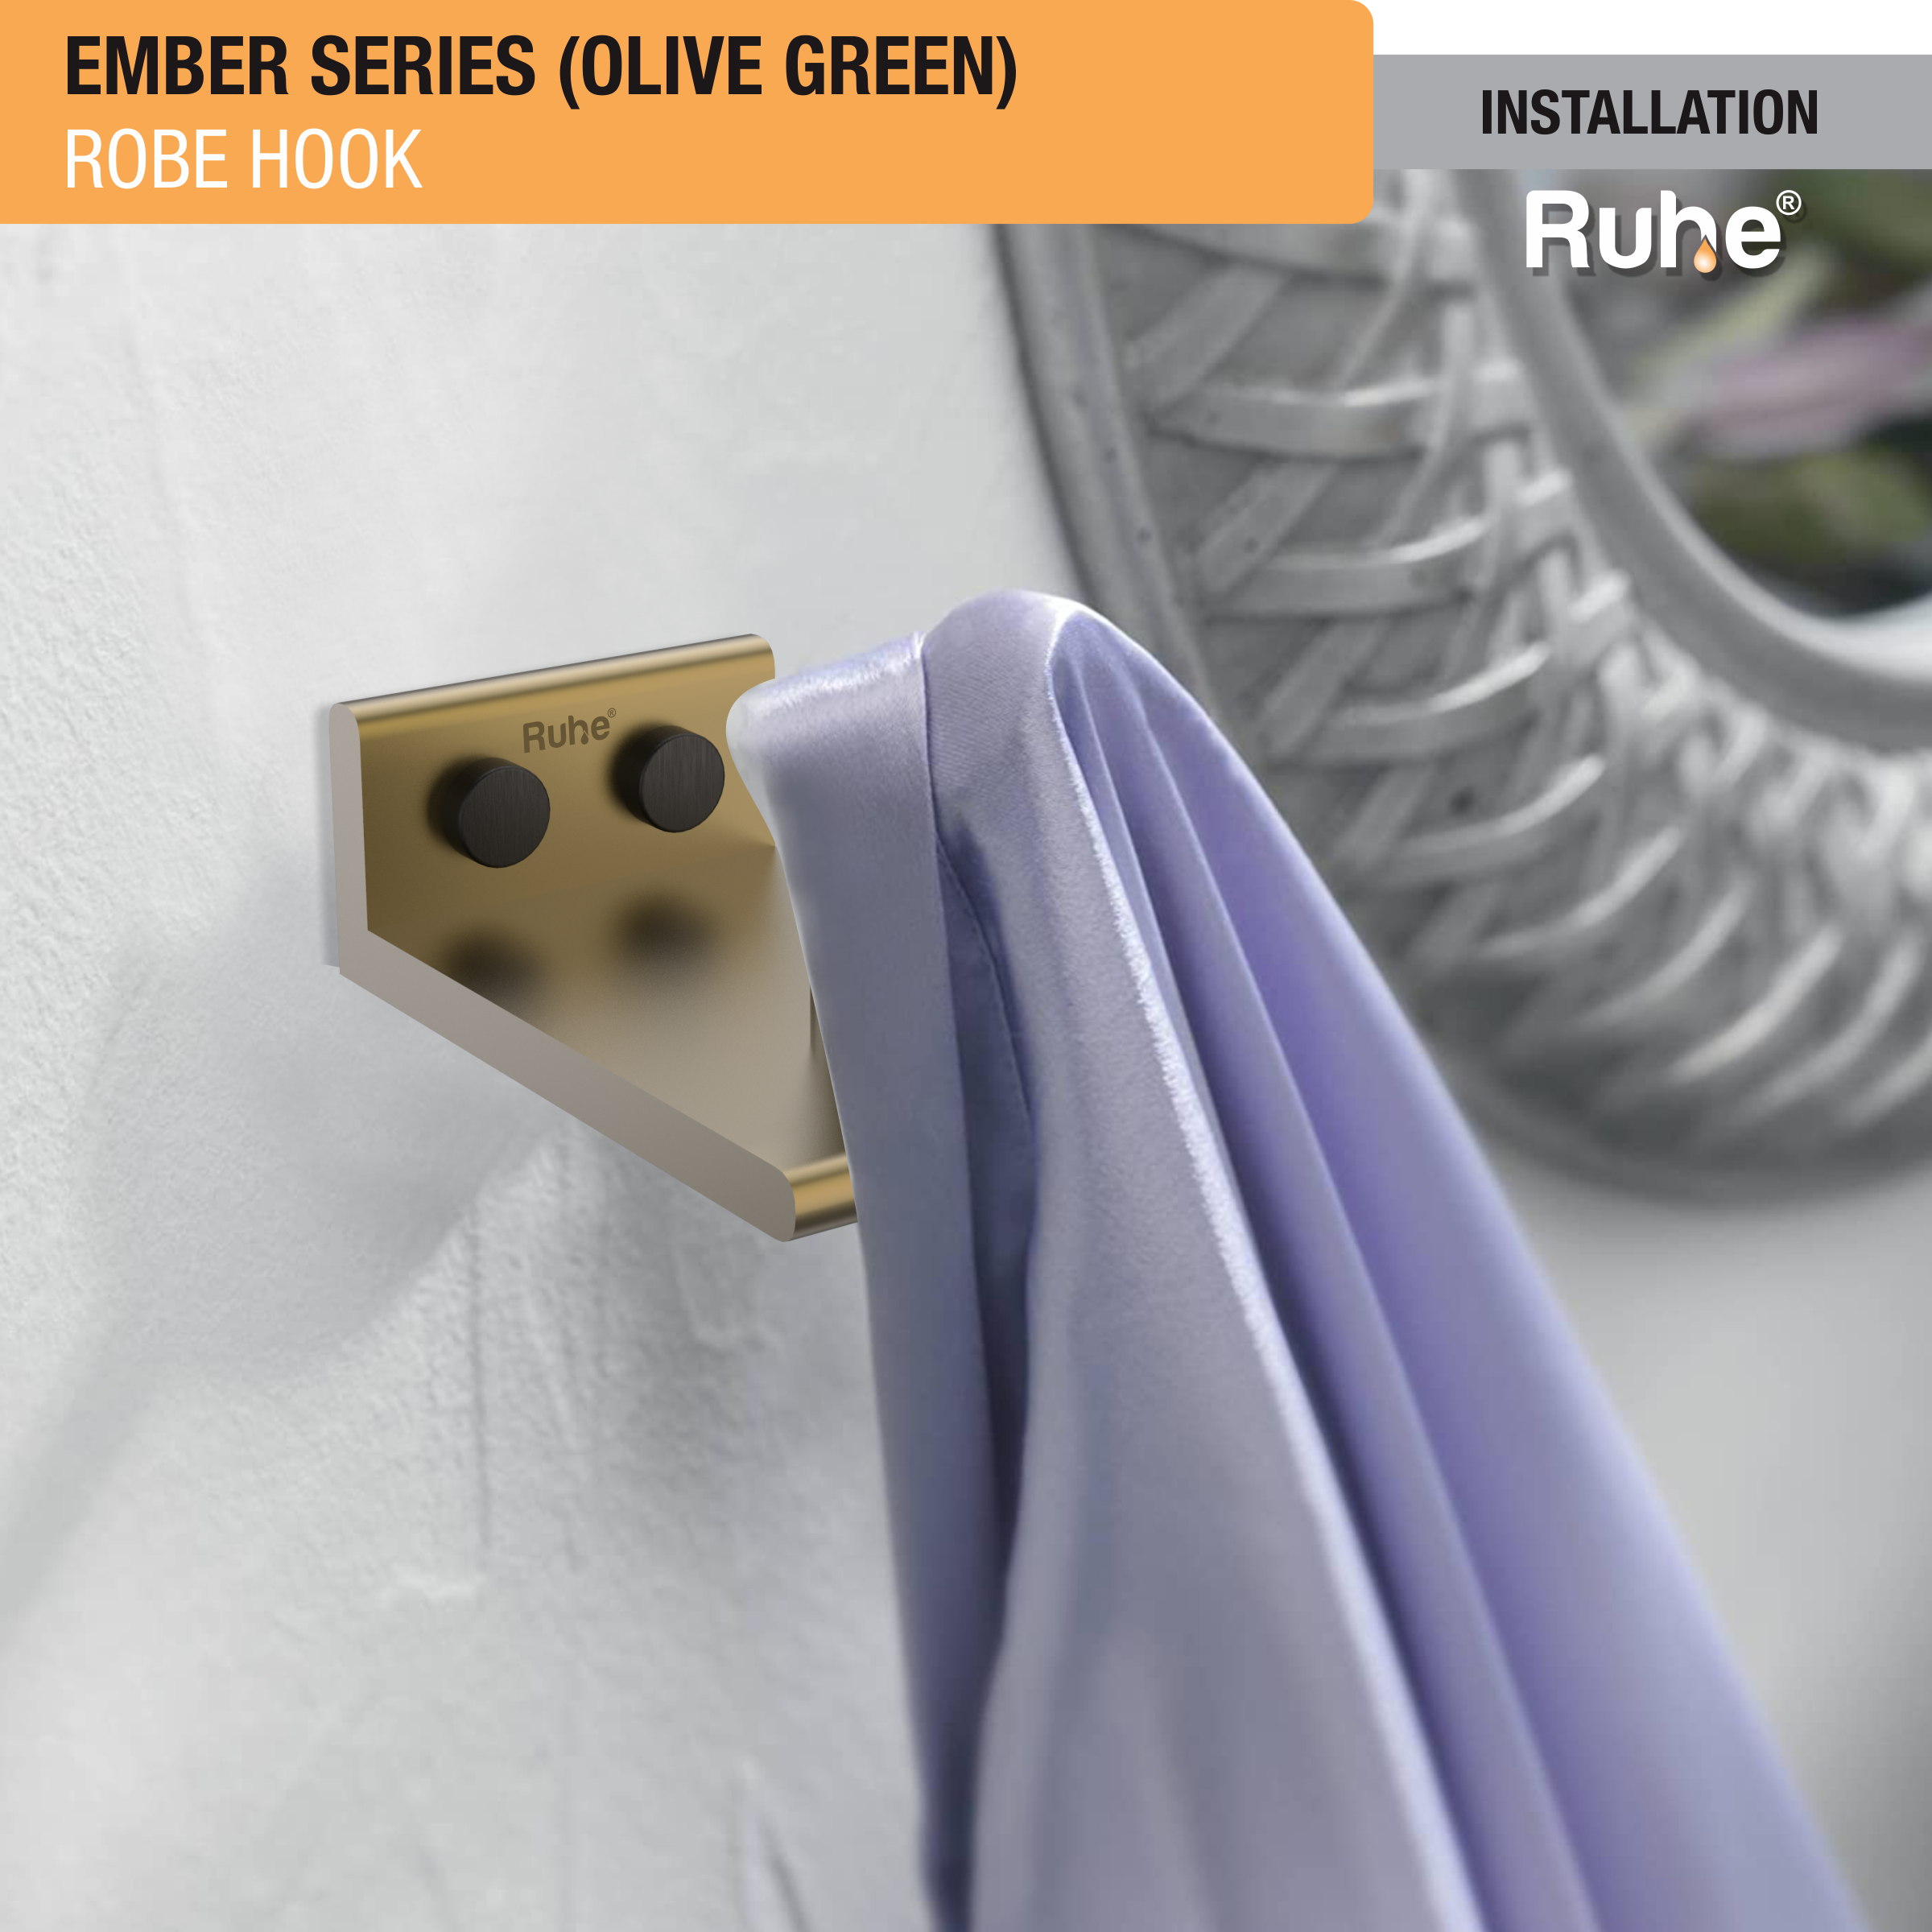 Ember Olive Green Robe Hook (Space Aluminium) installation